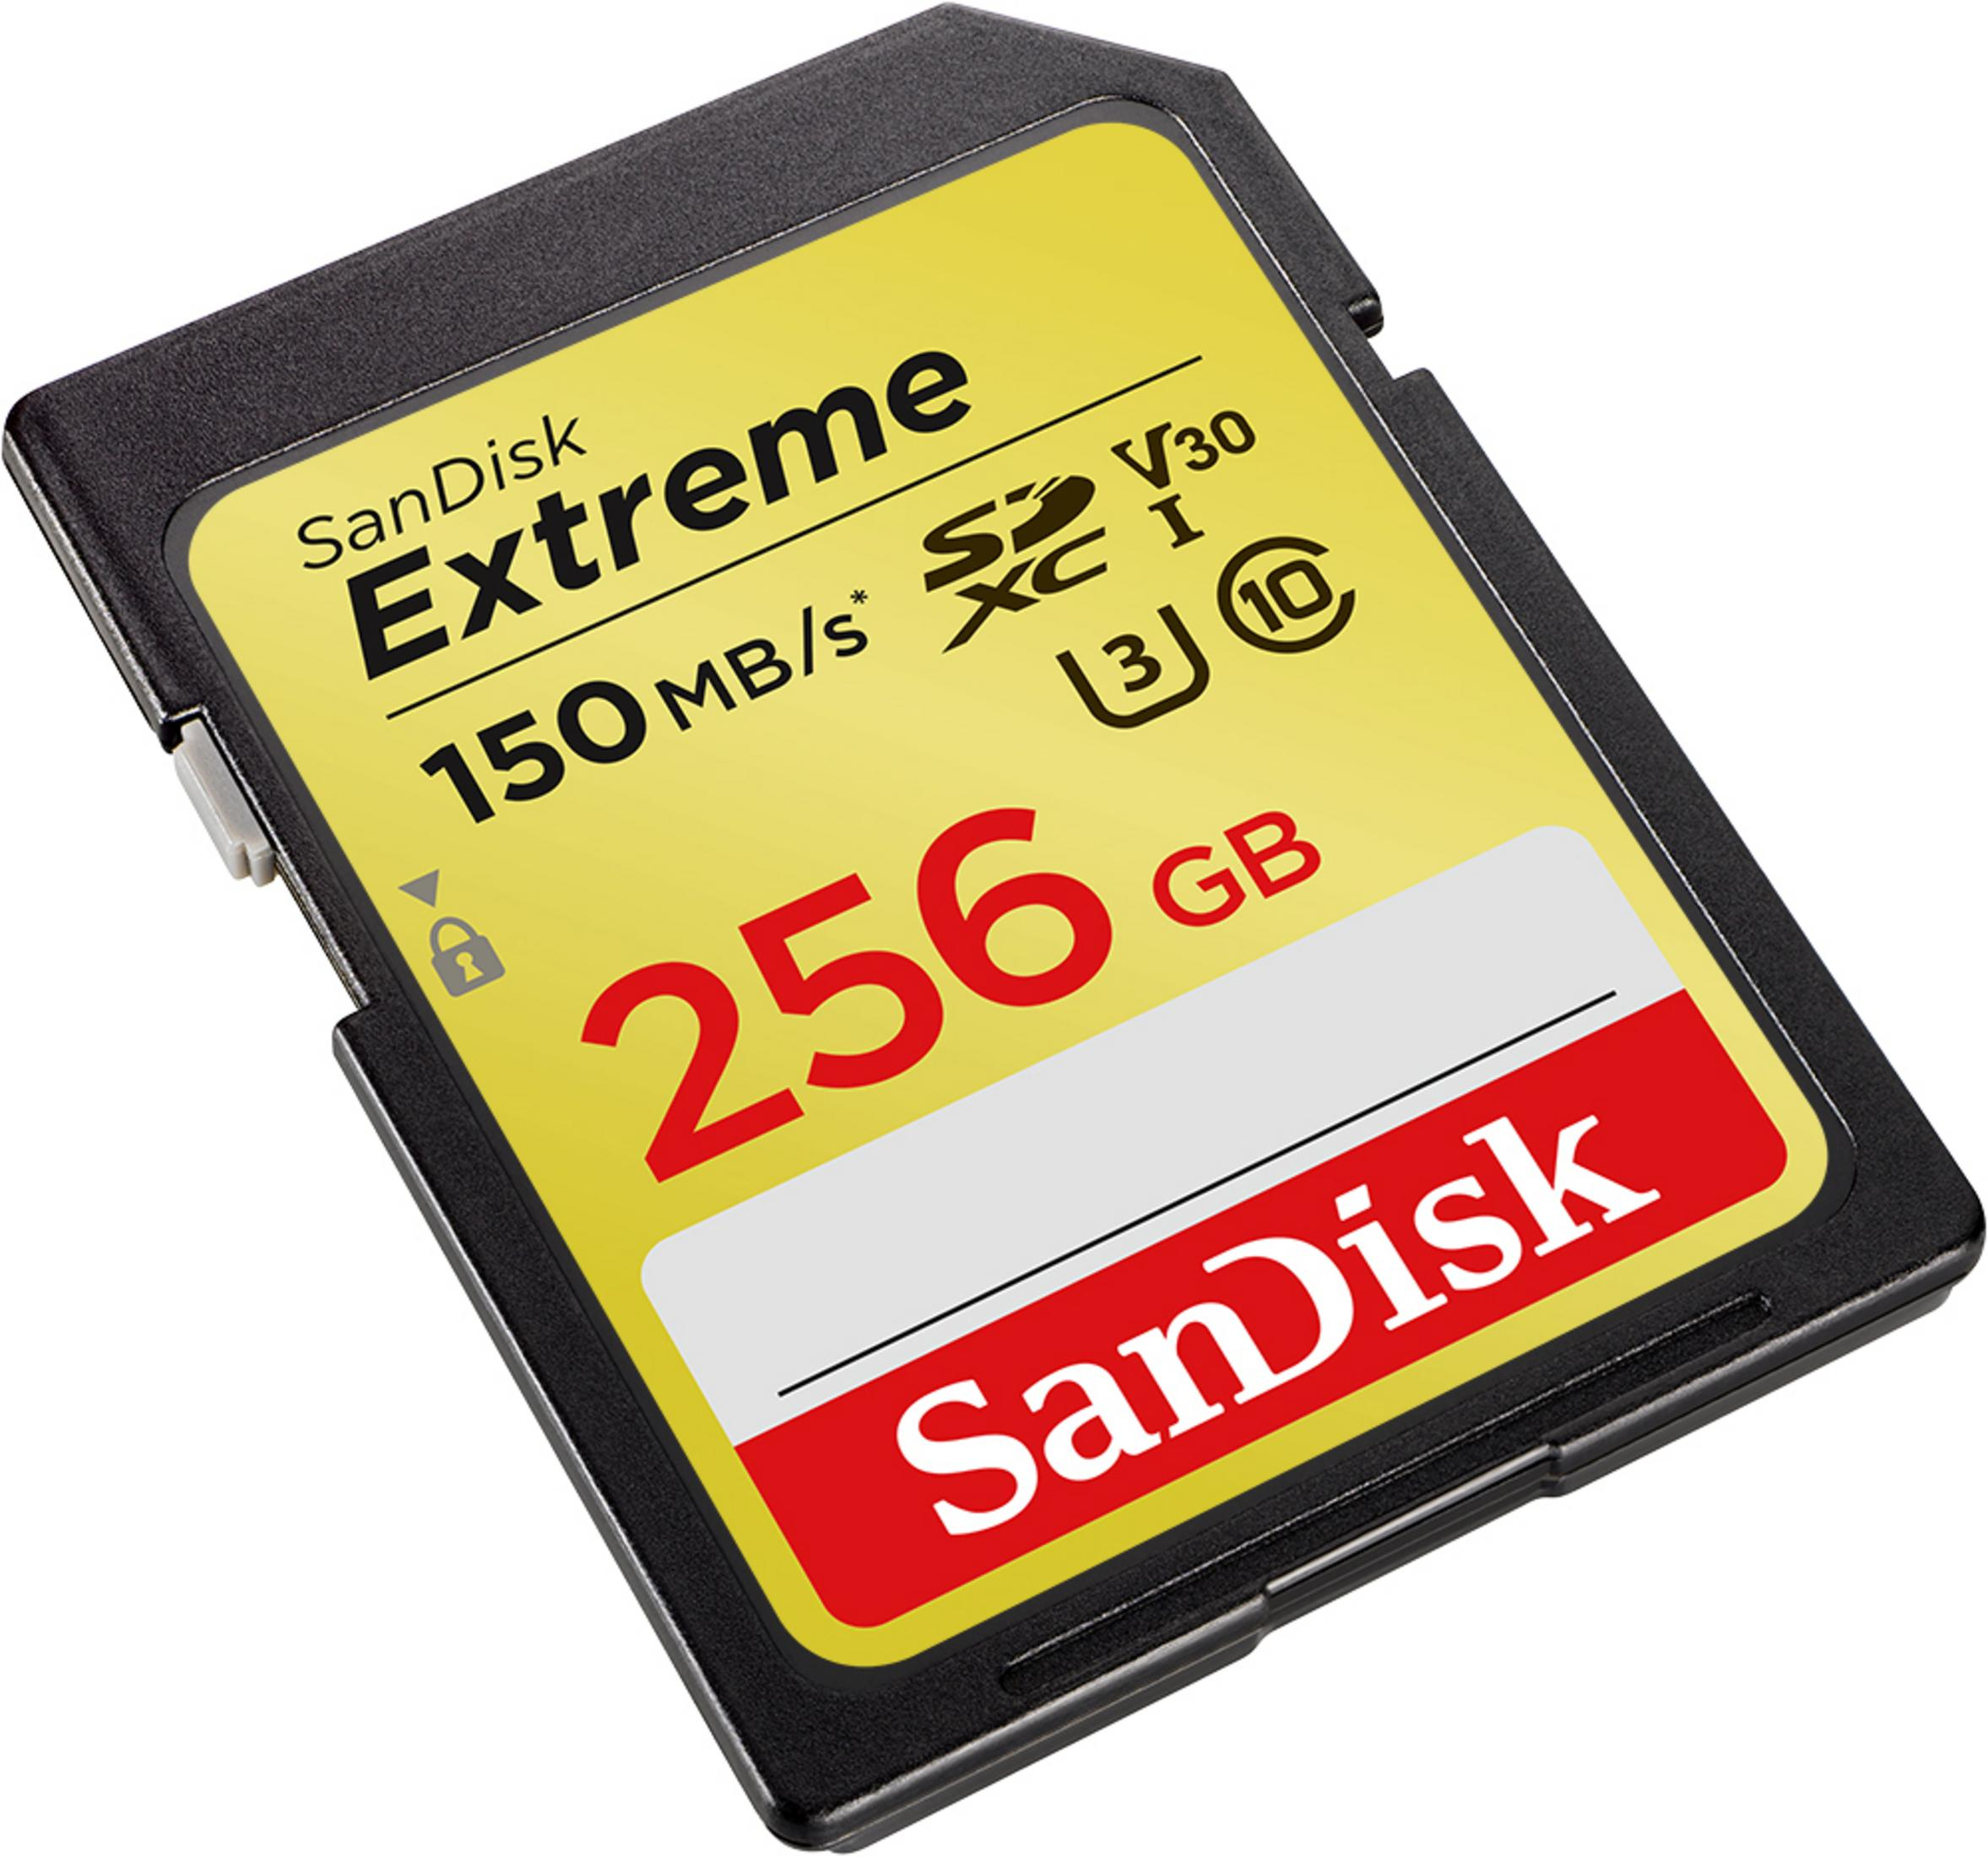 256 EXTREME GB, SDSDXV5-256G-GNCIN Speicherkarte, 256, Micro-SDXC SDXC SANDISK 150 MB/s